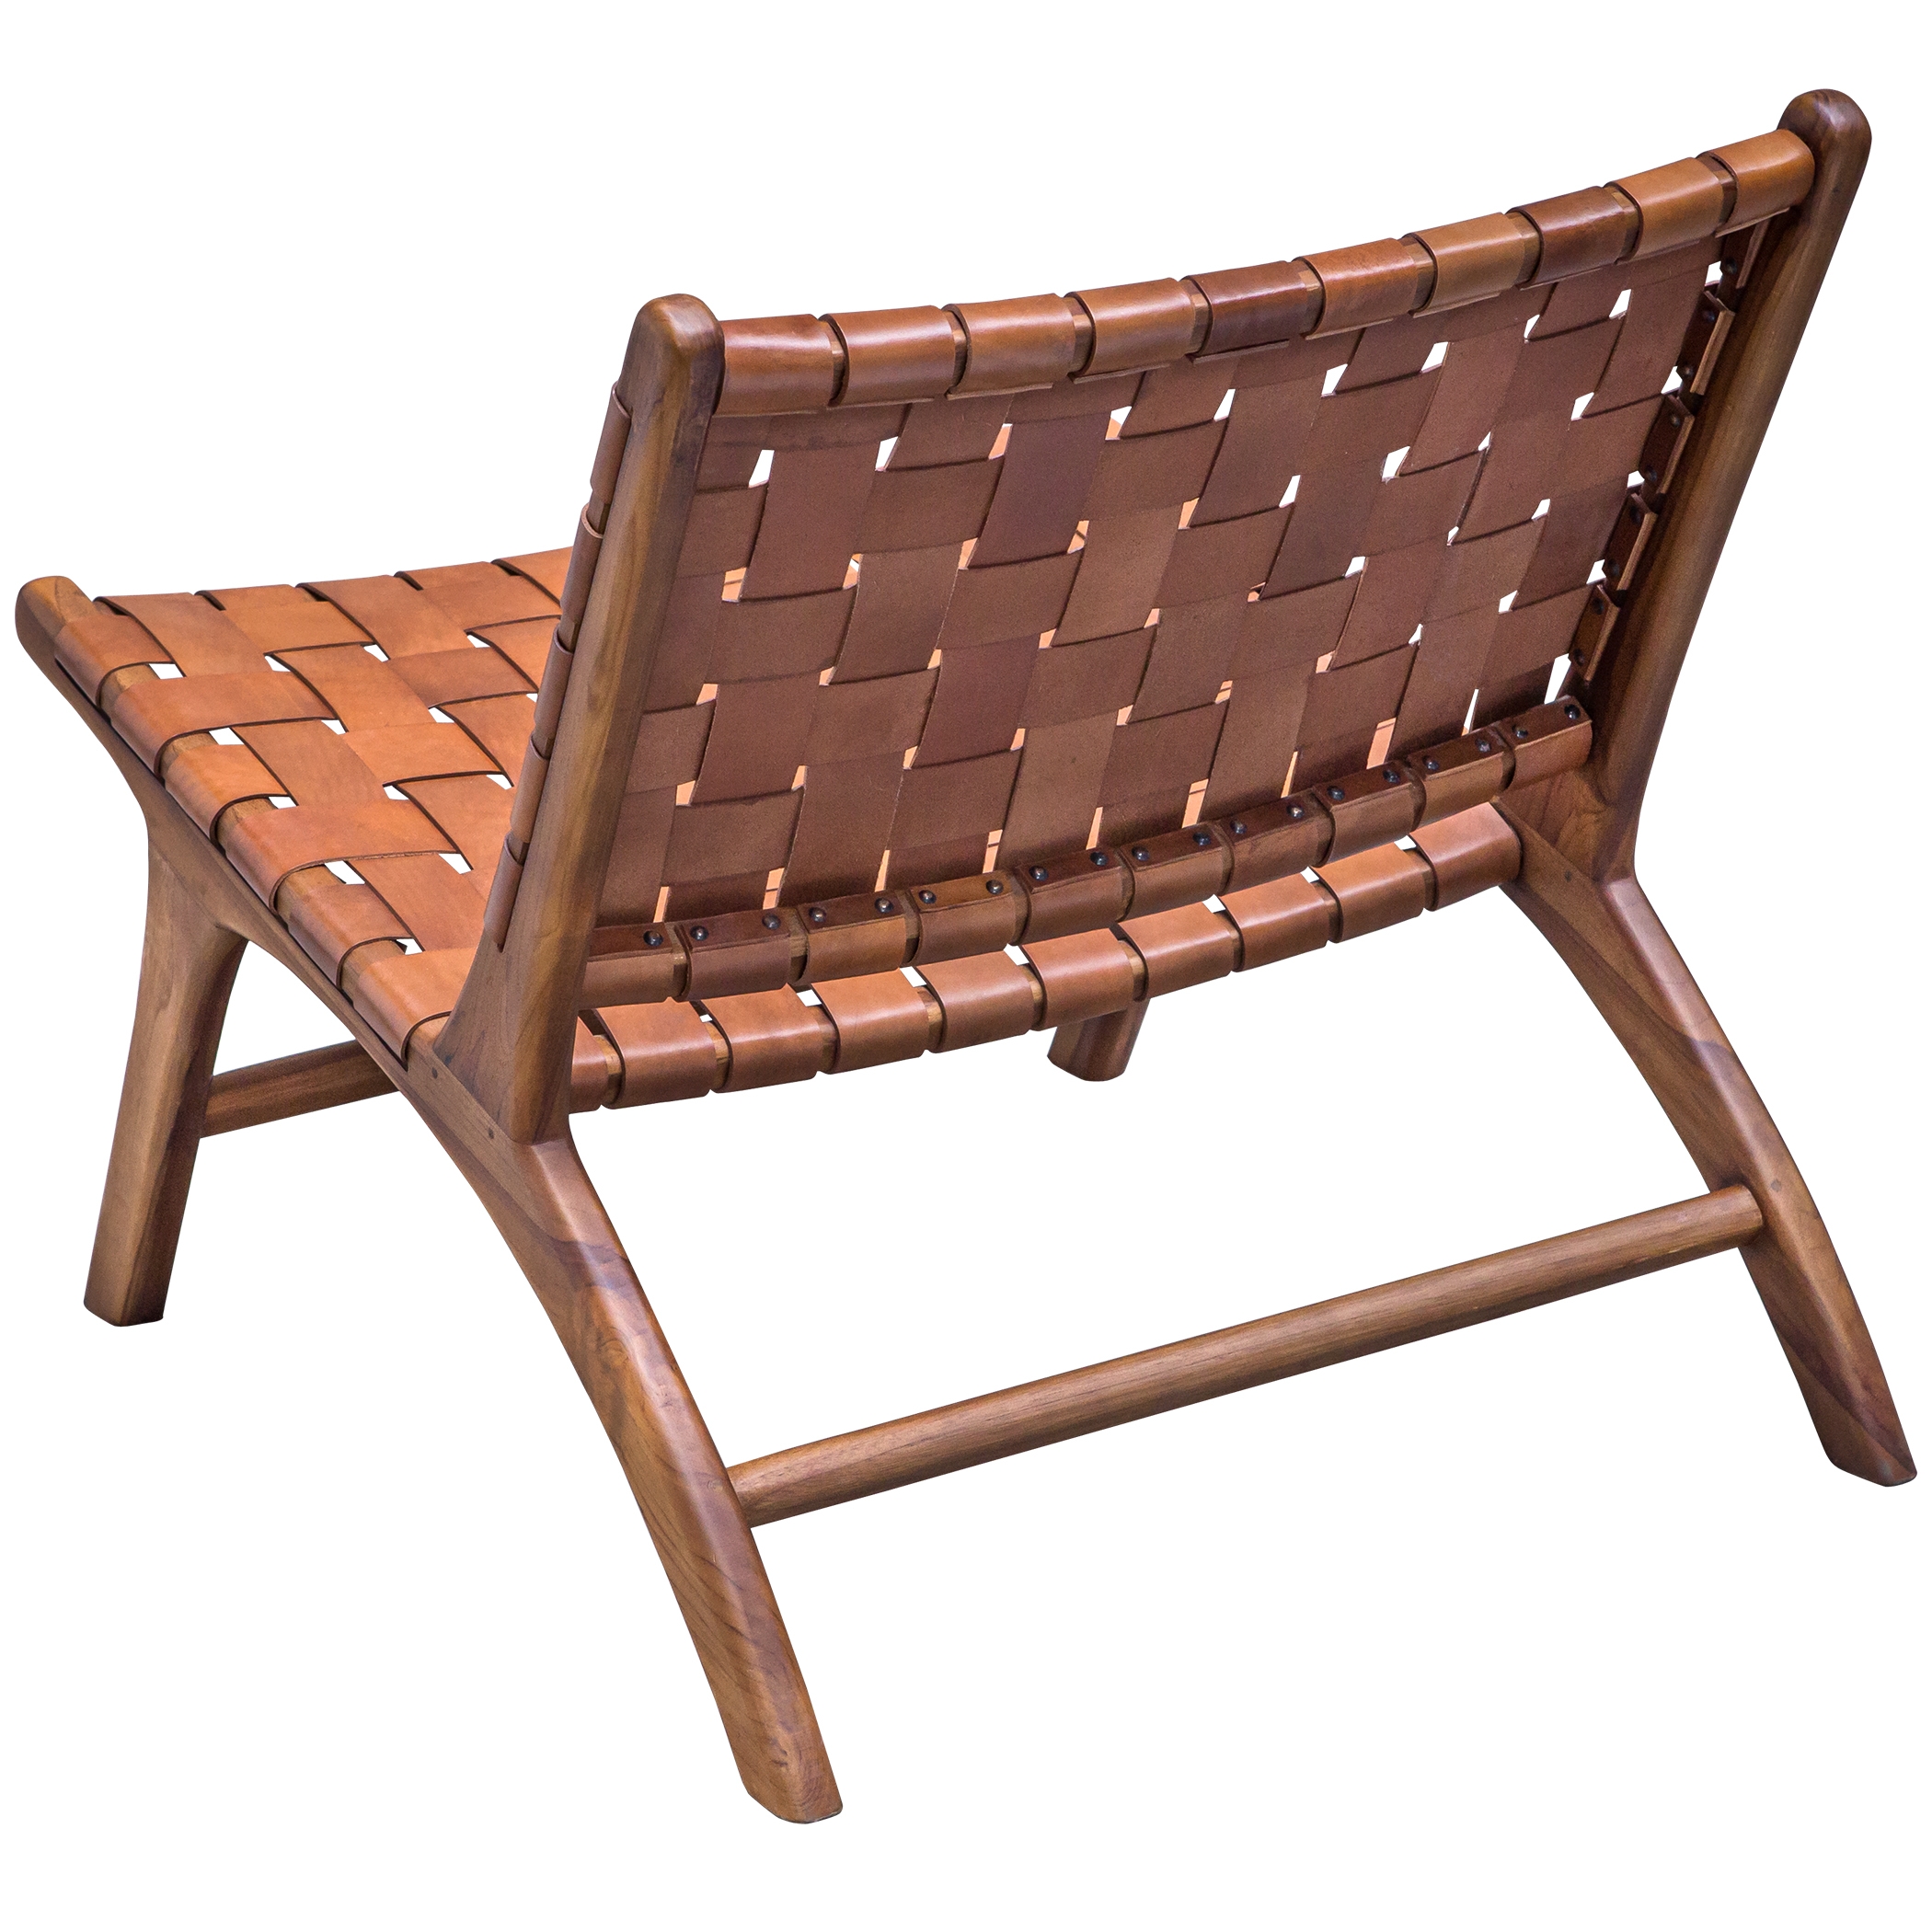 Plait Woven Leather Accent Chair - Image 4